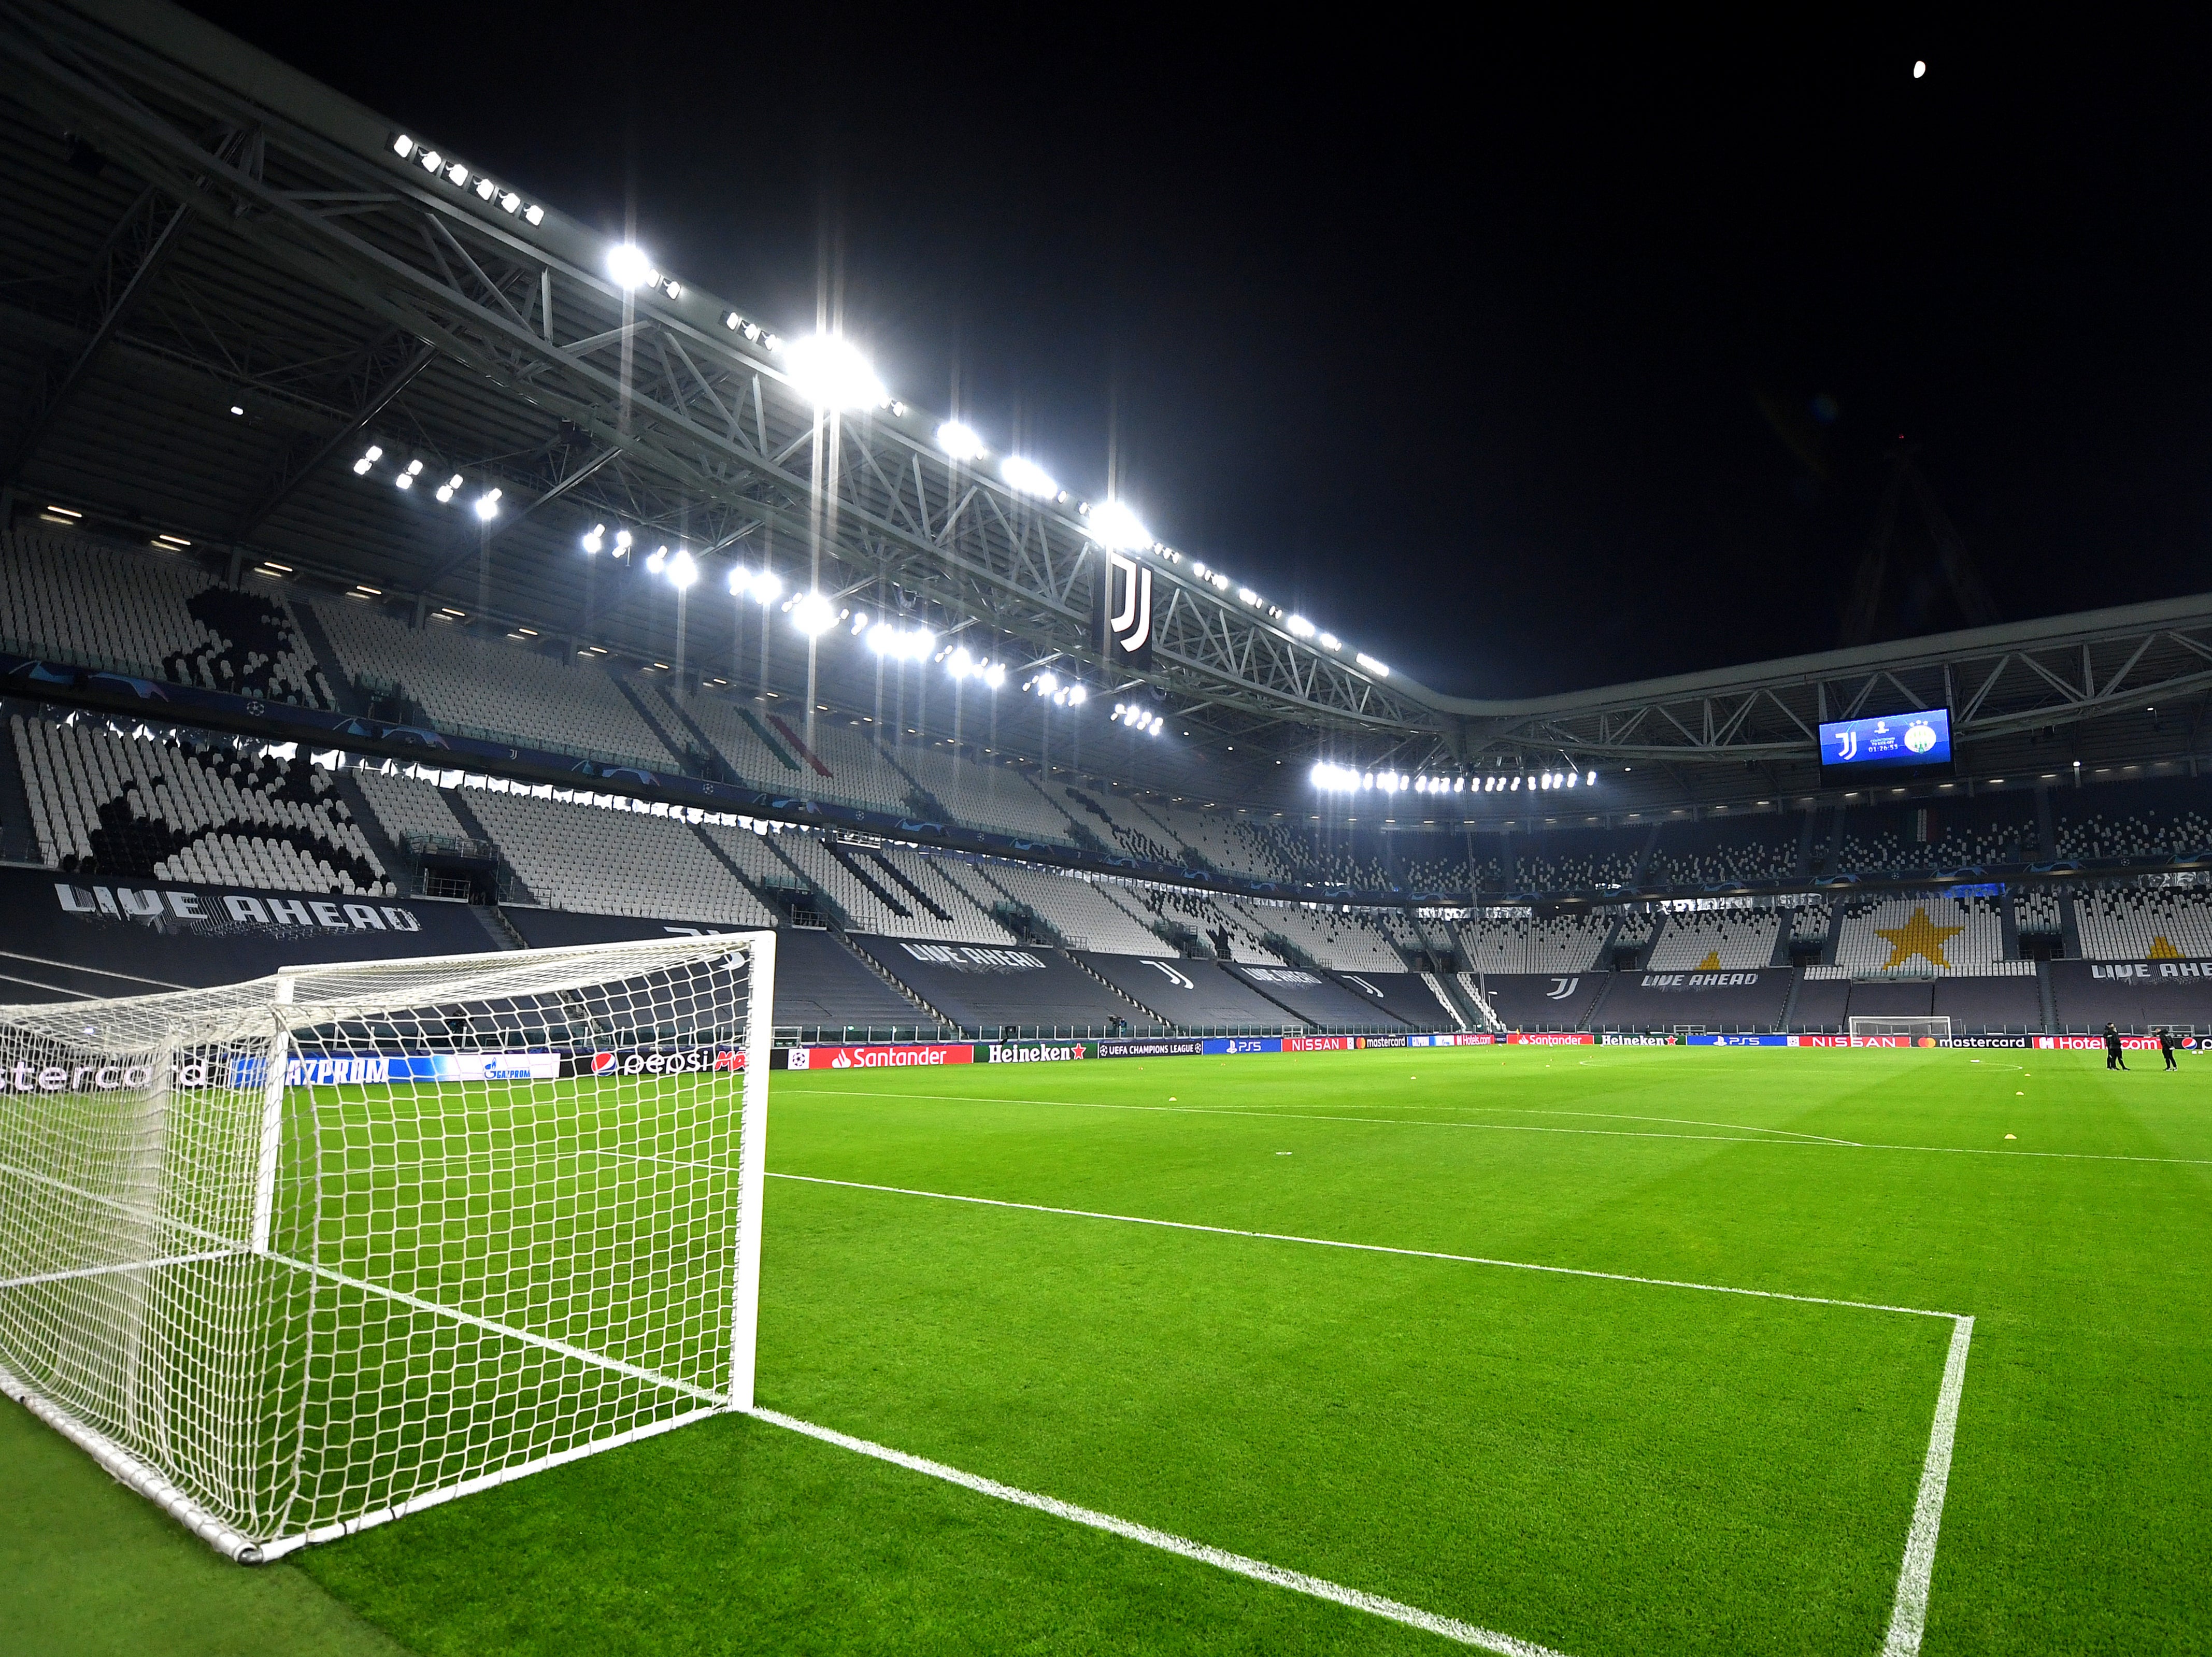 Juventus’ Allianz Stadium will host Real Sociedad vs Man United in the Europa League